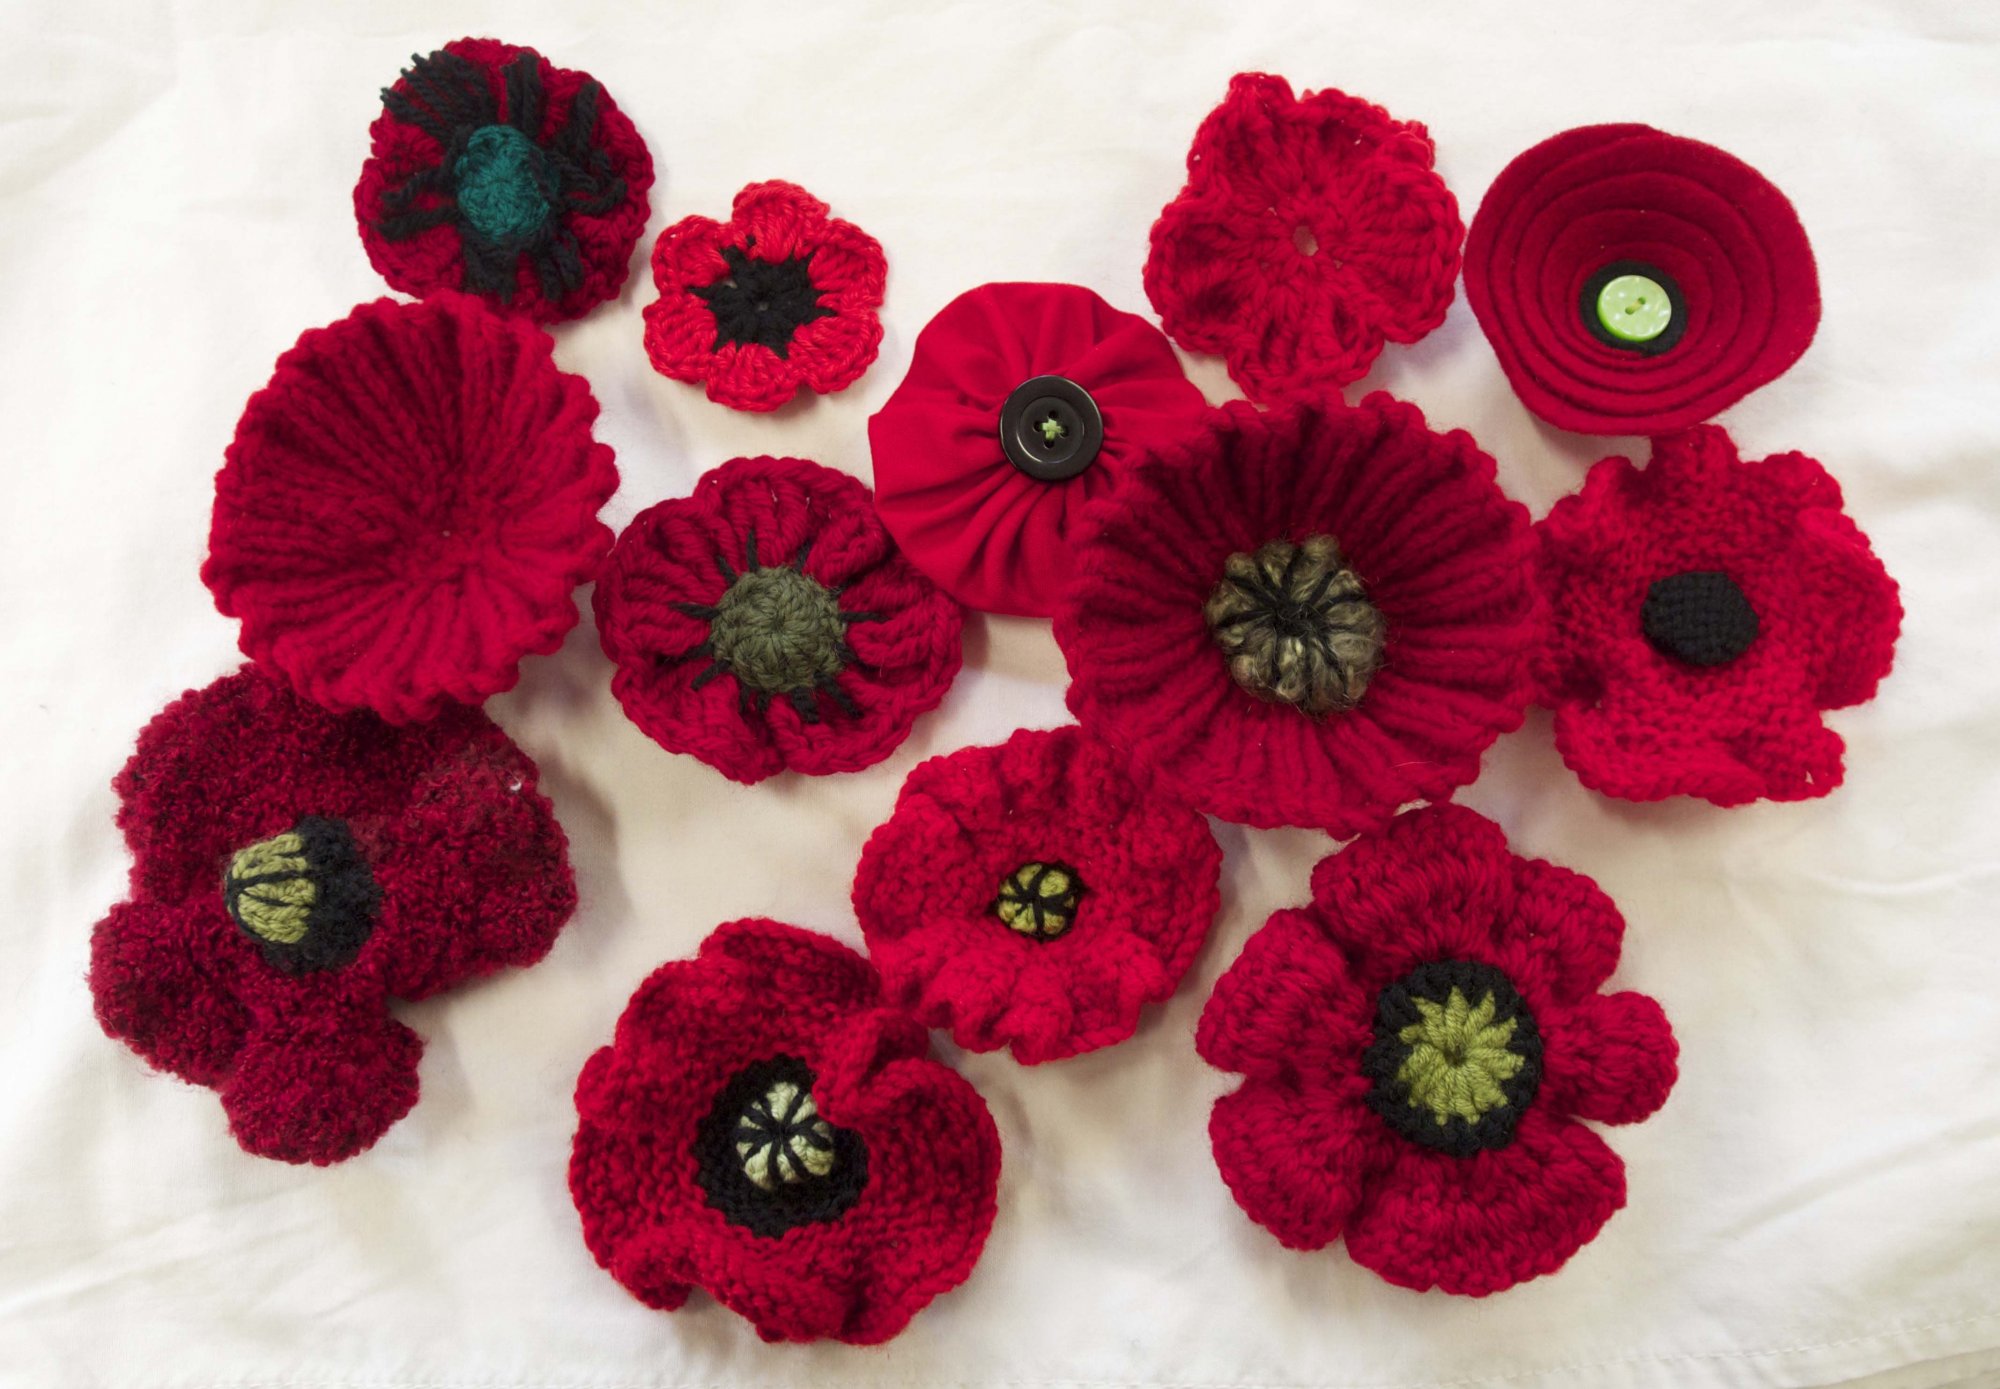 Poppy flower knitted poppies free pattern